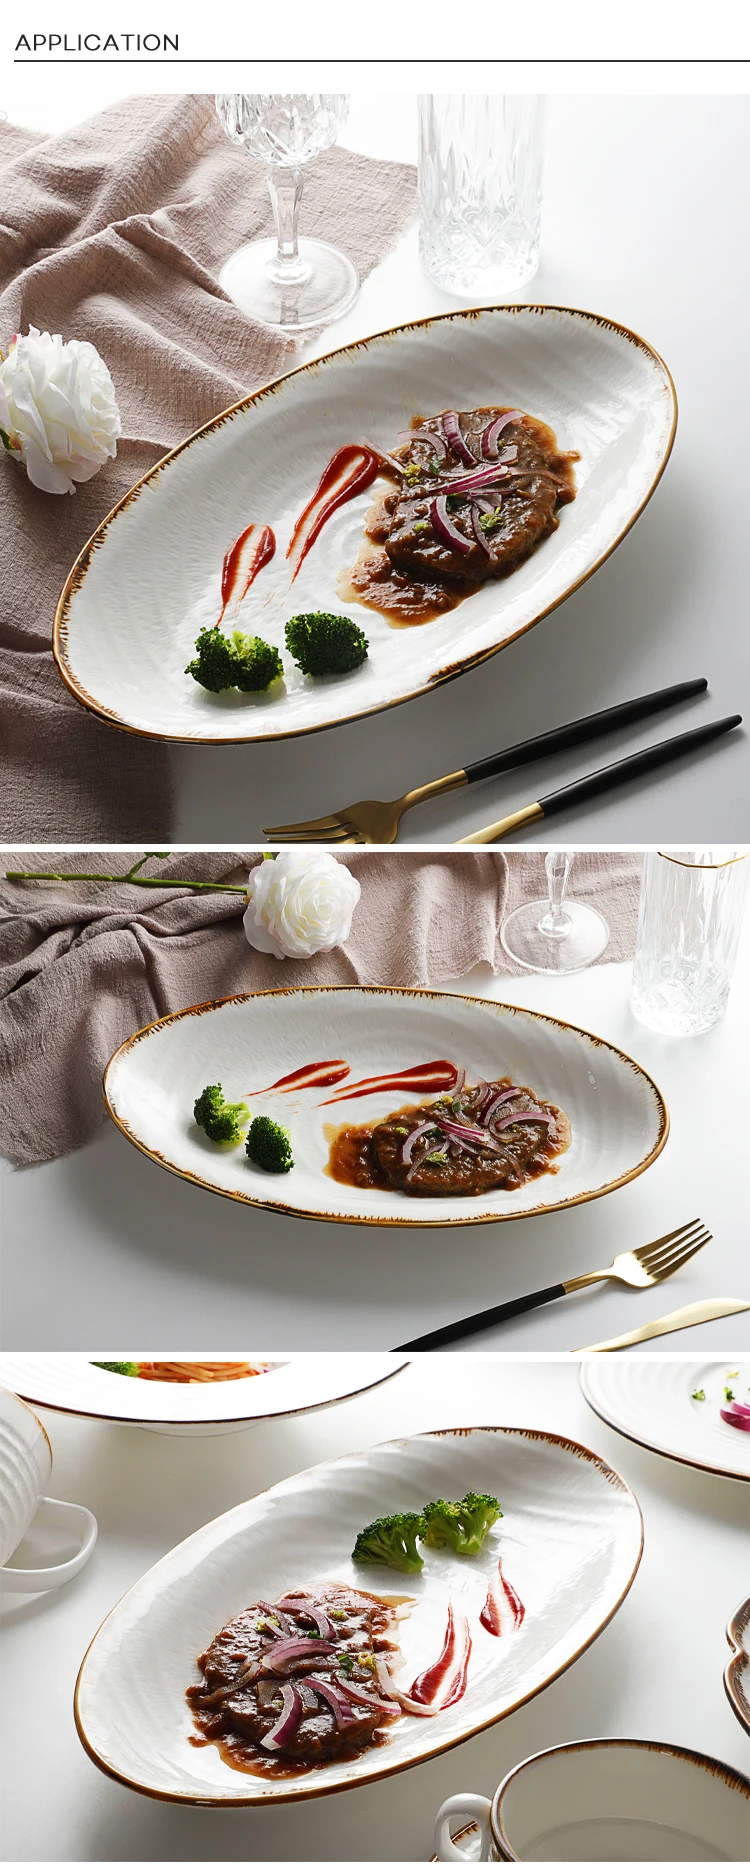 Restaurant Buffet Chafing Catering Dinnerware Serving Crockery Dinner Plates Porcelain Oval Plate^